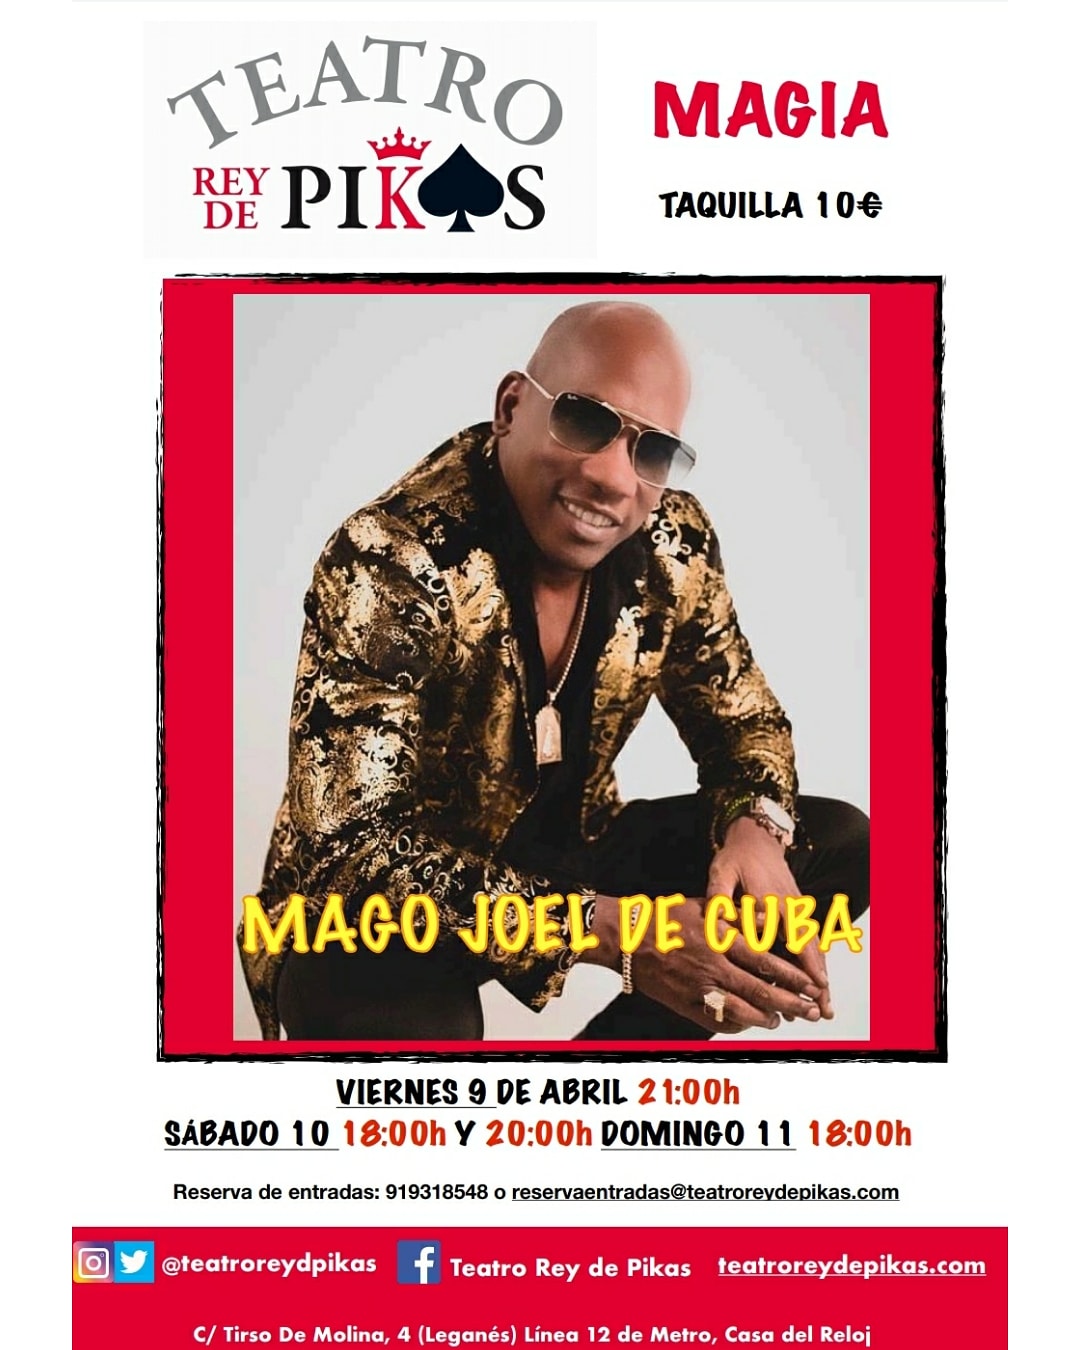 Joel de Cuba - Magia en Leganés en el Teatro Ray de Pikas